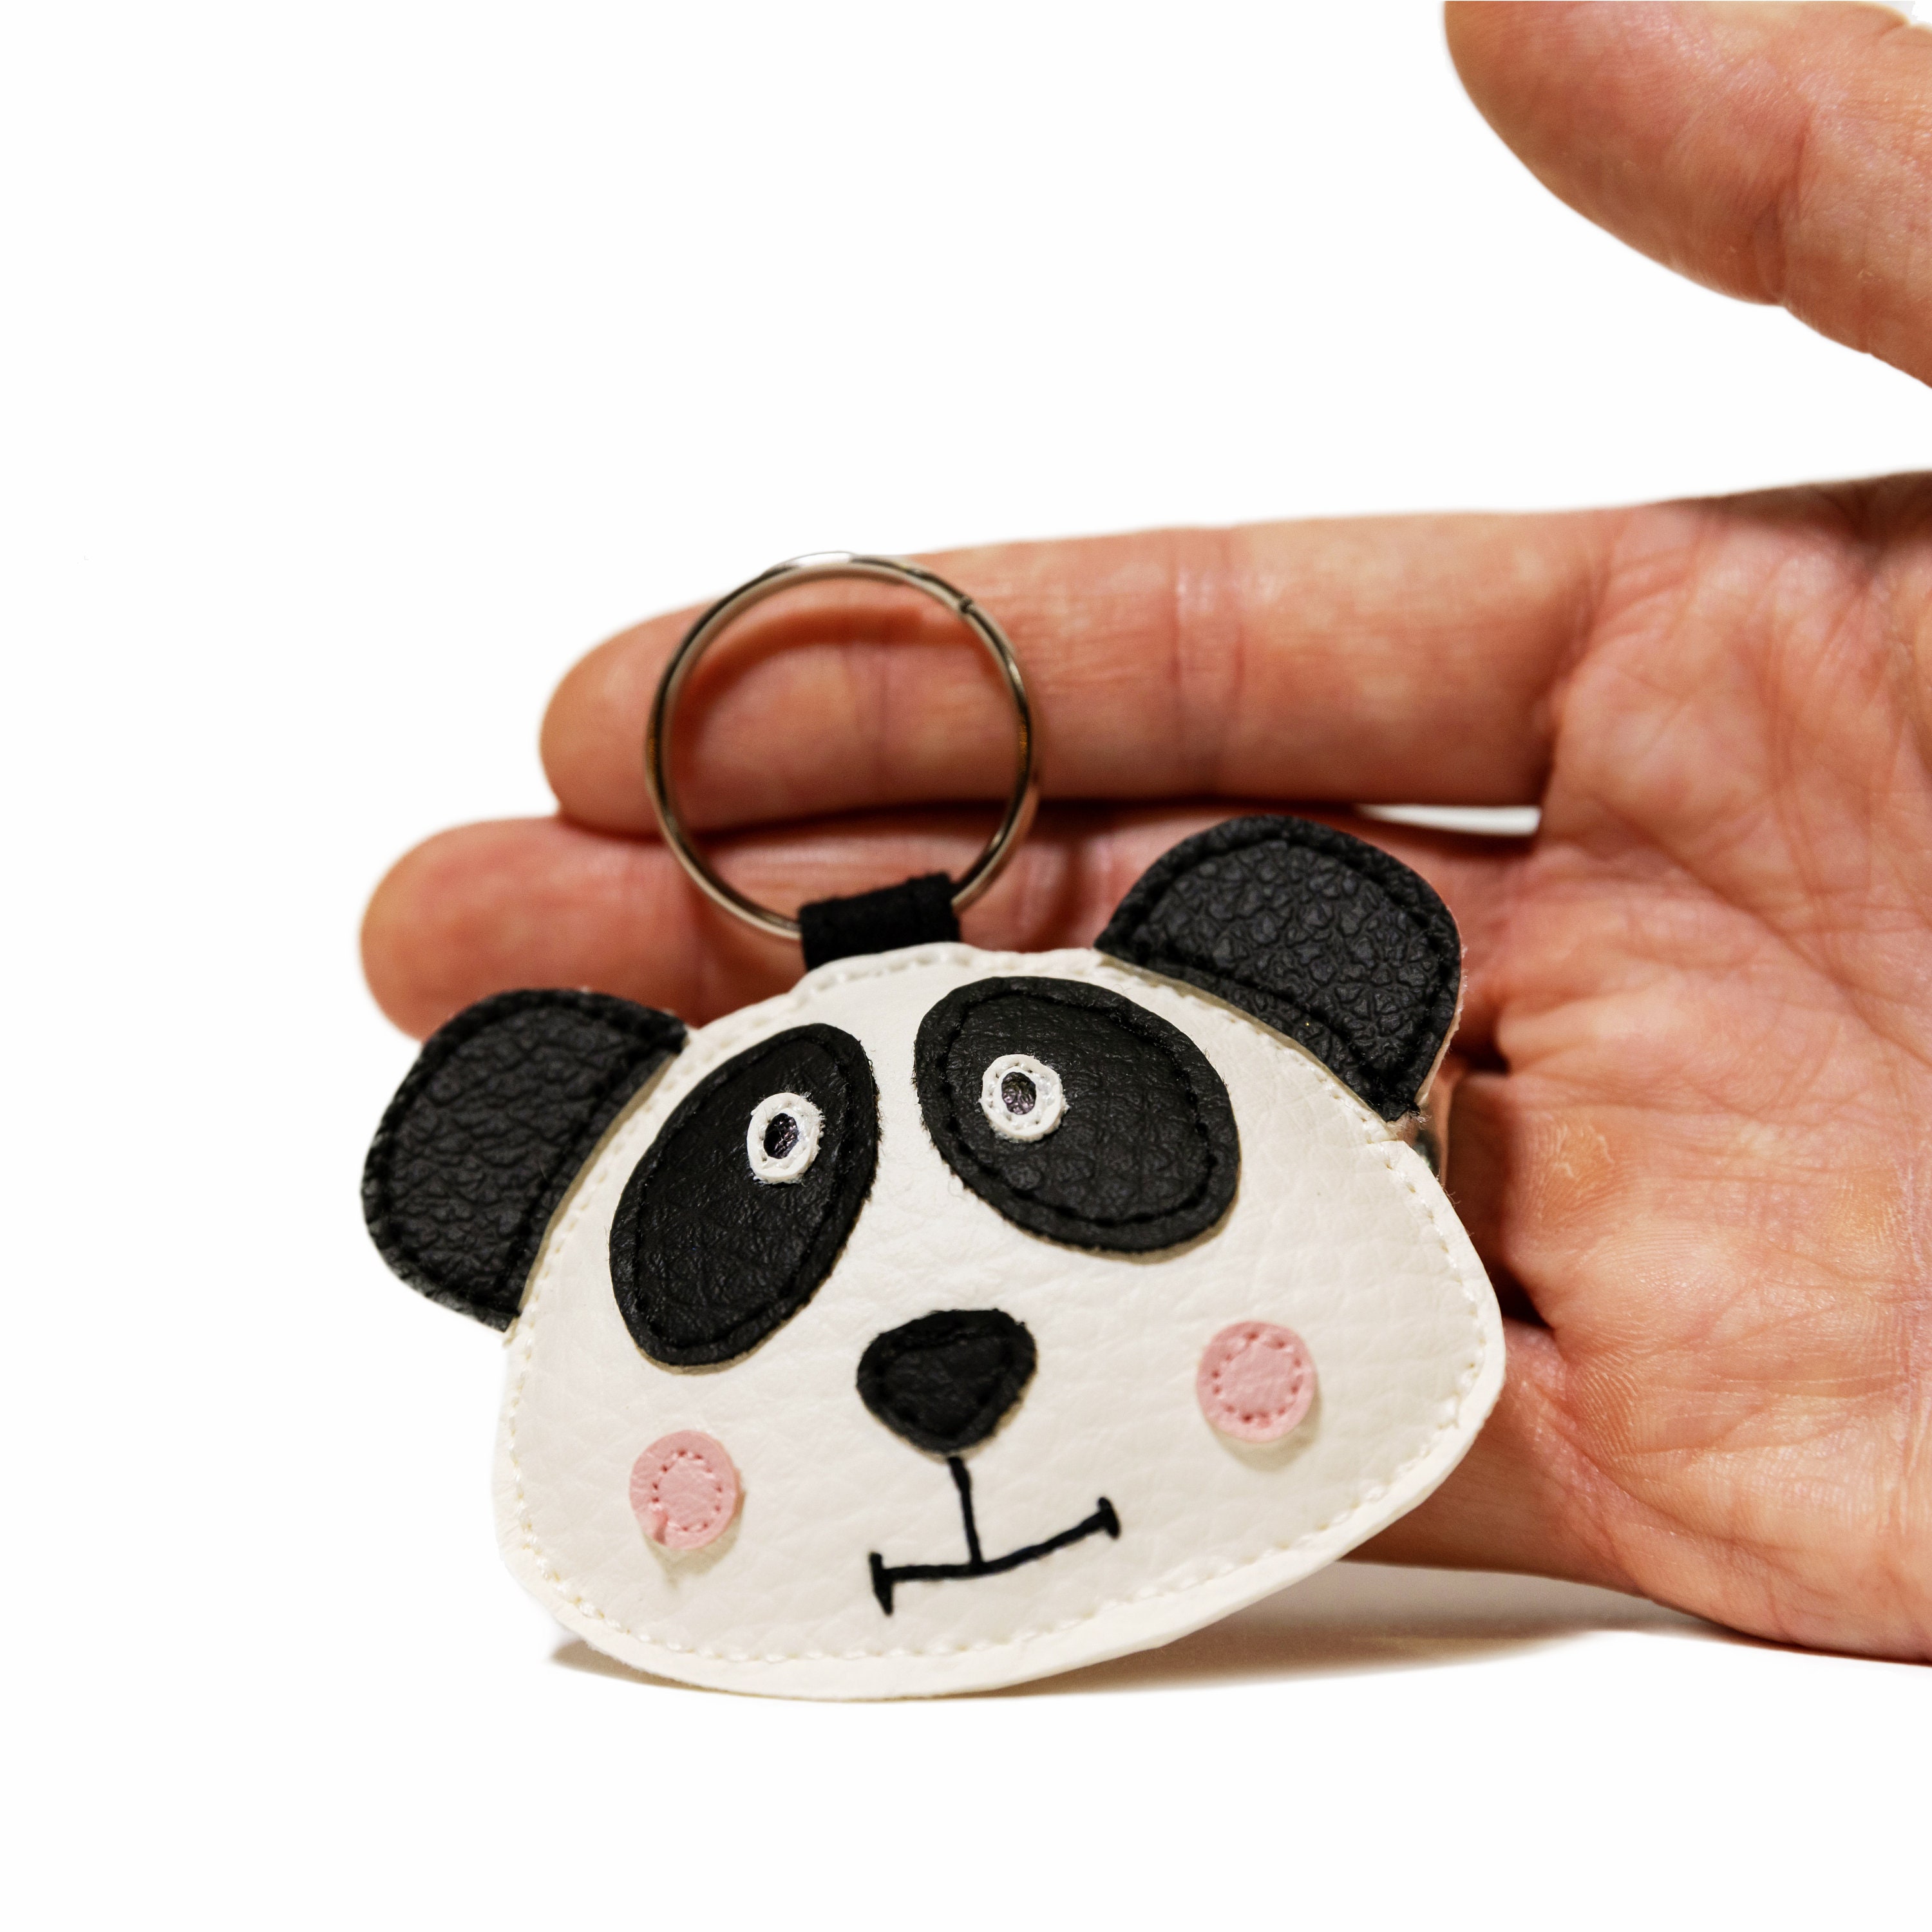 Dropship Black Cute Panda Crossbody Bag Mini PU Satchel Bag Cell Phone Purse  to Sell Online at a Lower Price | Doba